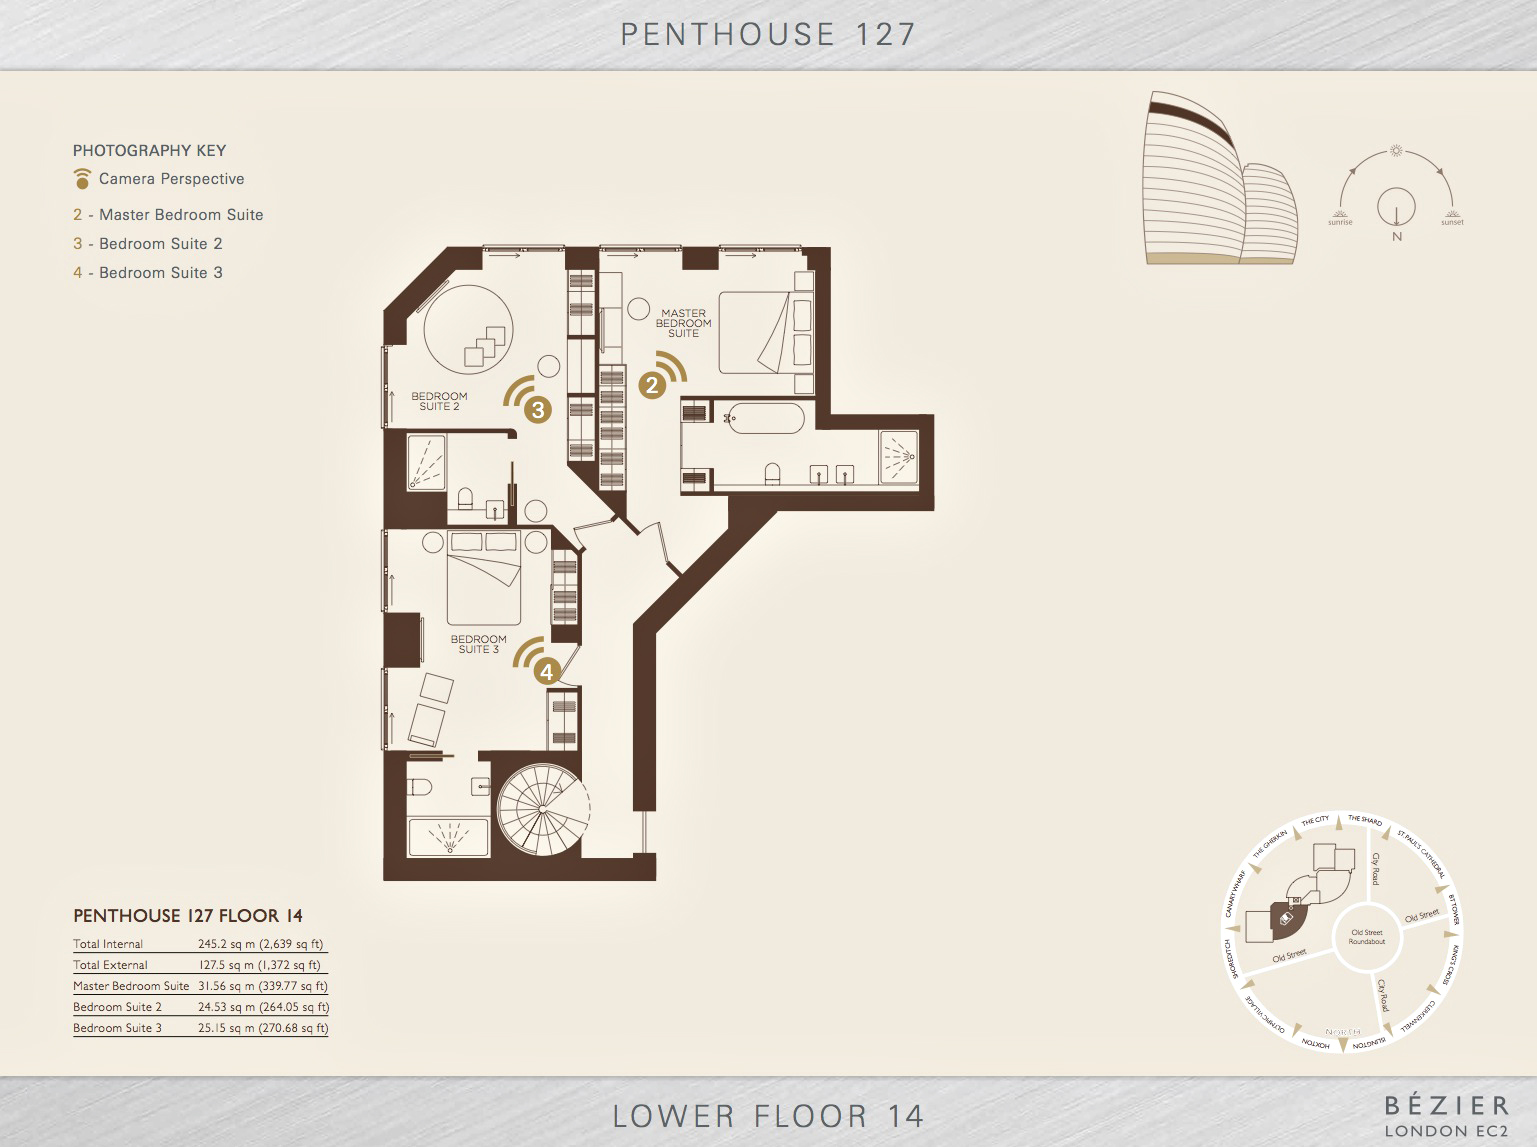 Lower Floor 14 Plan – Penthouse 127 Bezier EC2 – London, England, UK